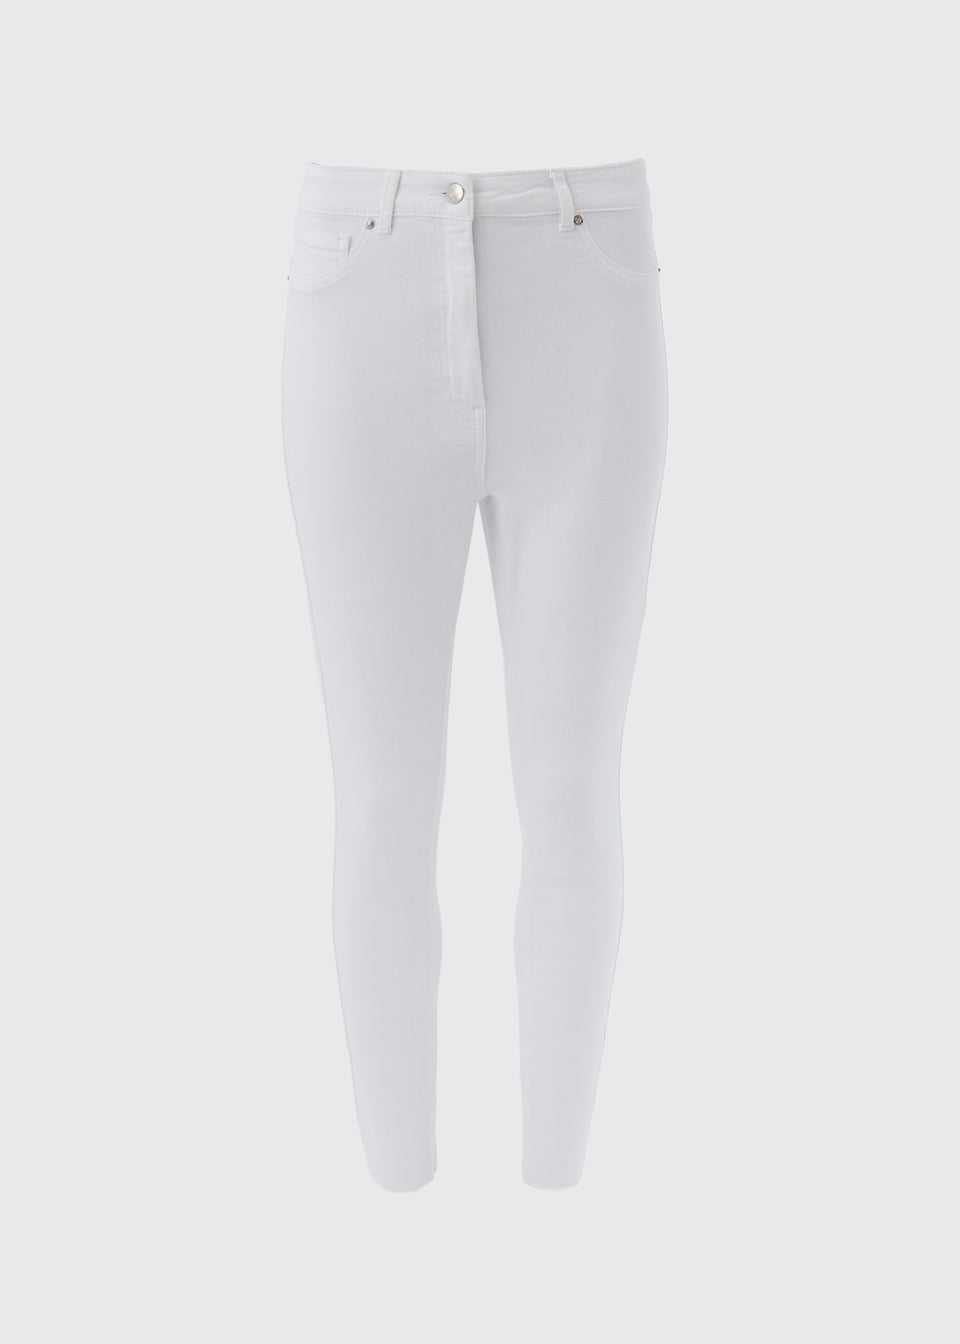 White Ankle Grazer Jeans